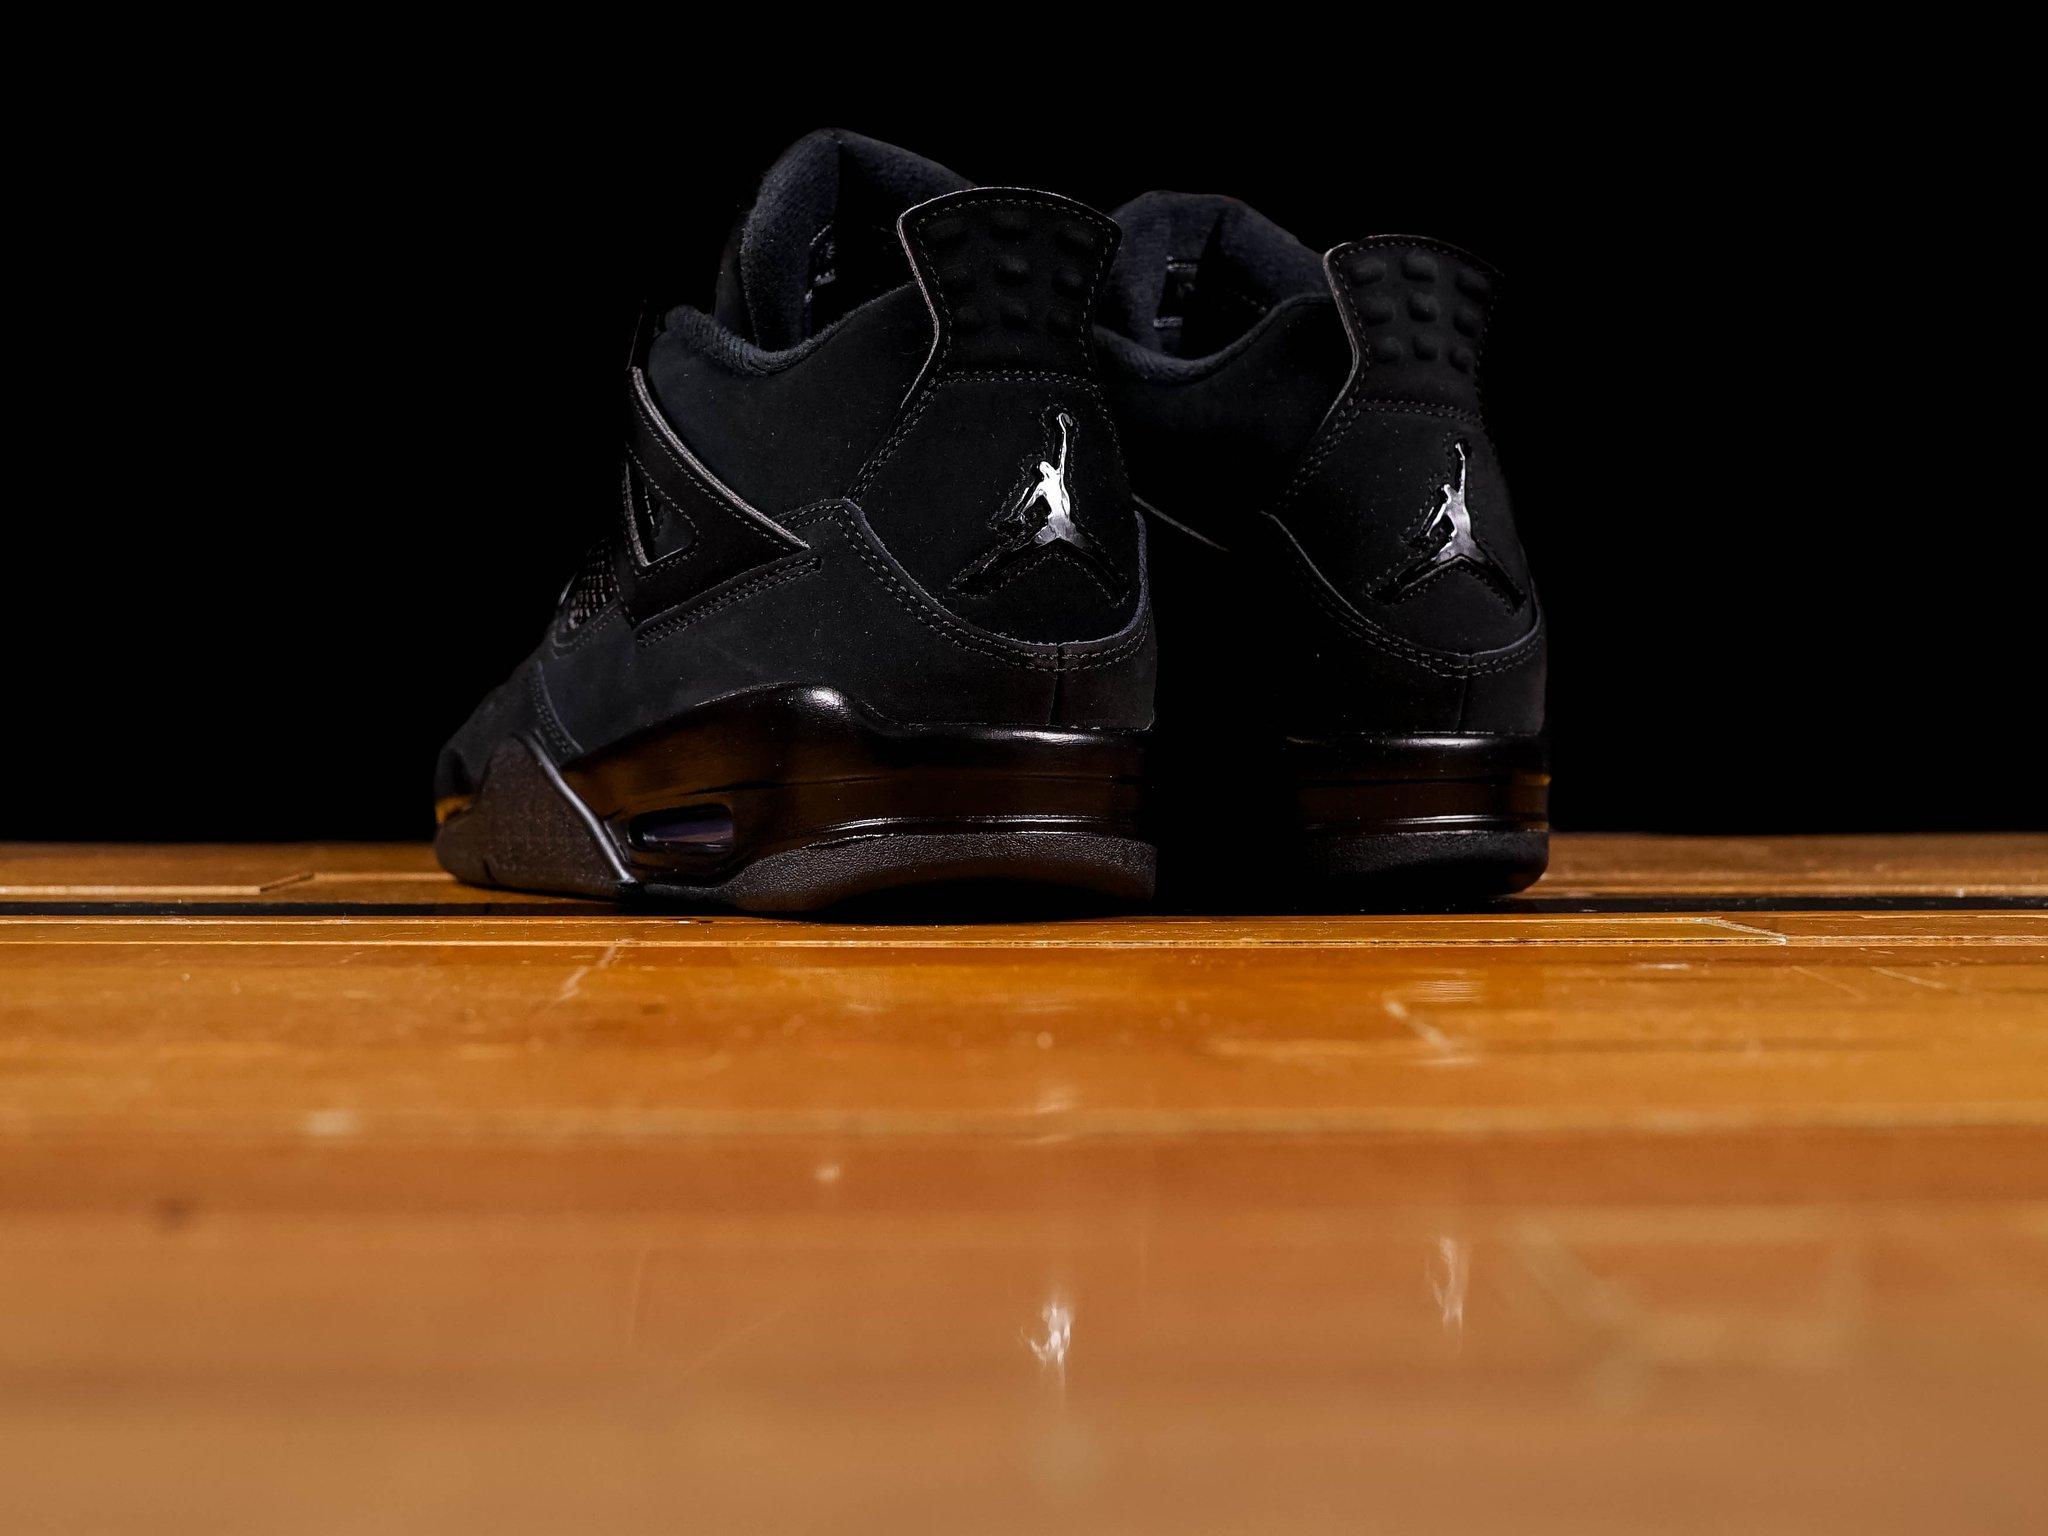 Men's Air Jordan 4 Retro 'Black Cat' [CU1110 010]